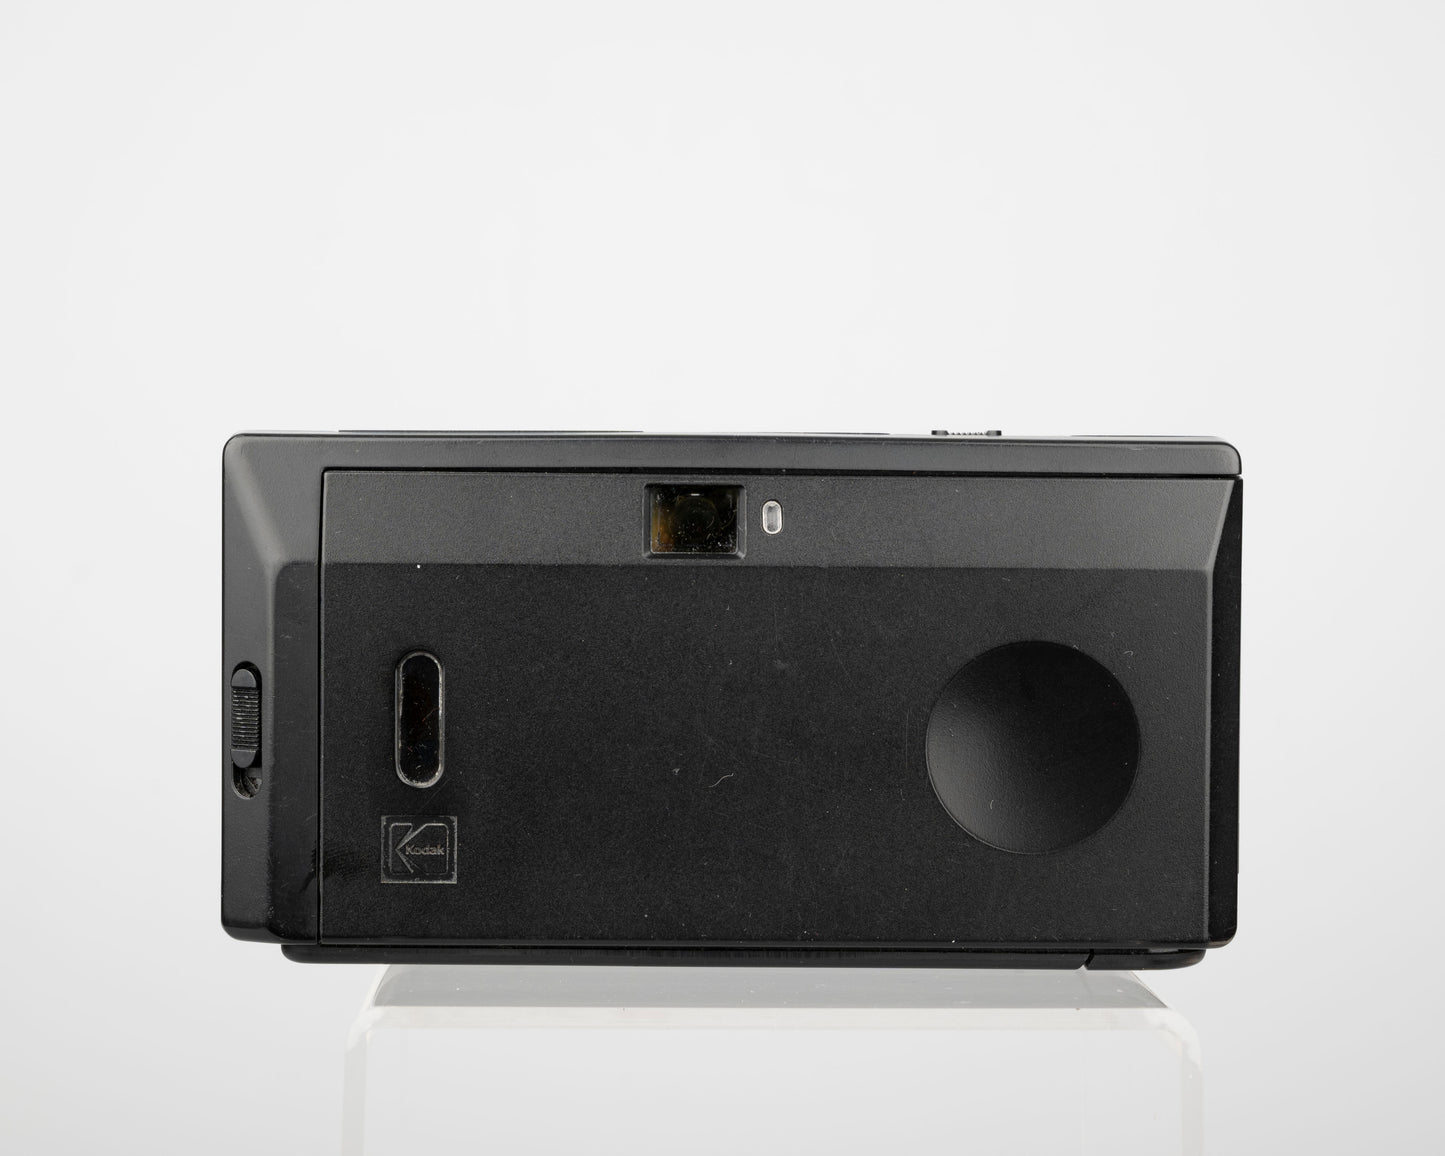 Kodak S-Series S300MD 35mm film camera (serial 048072565)